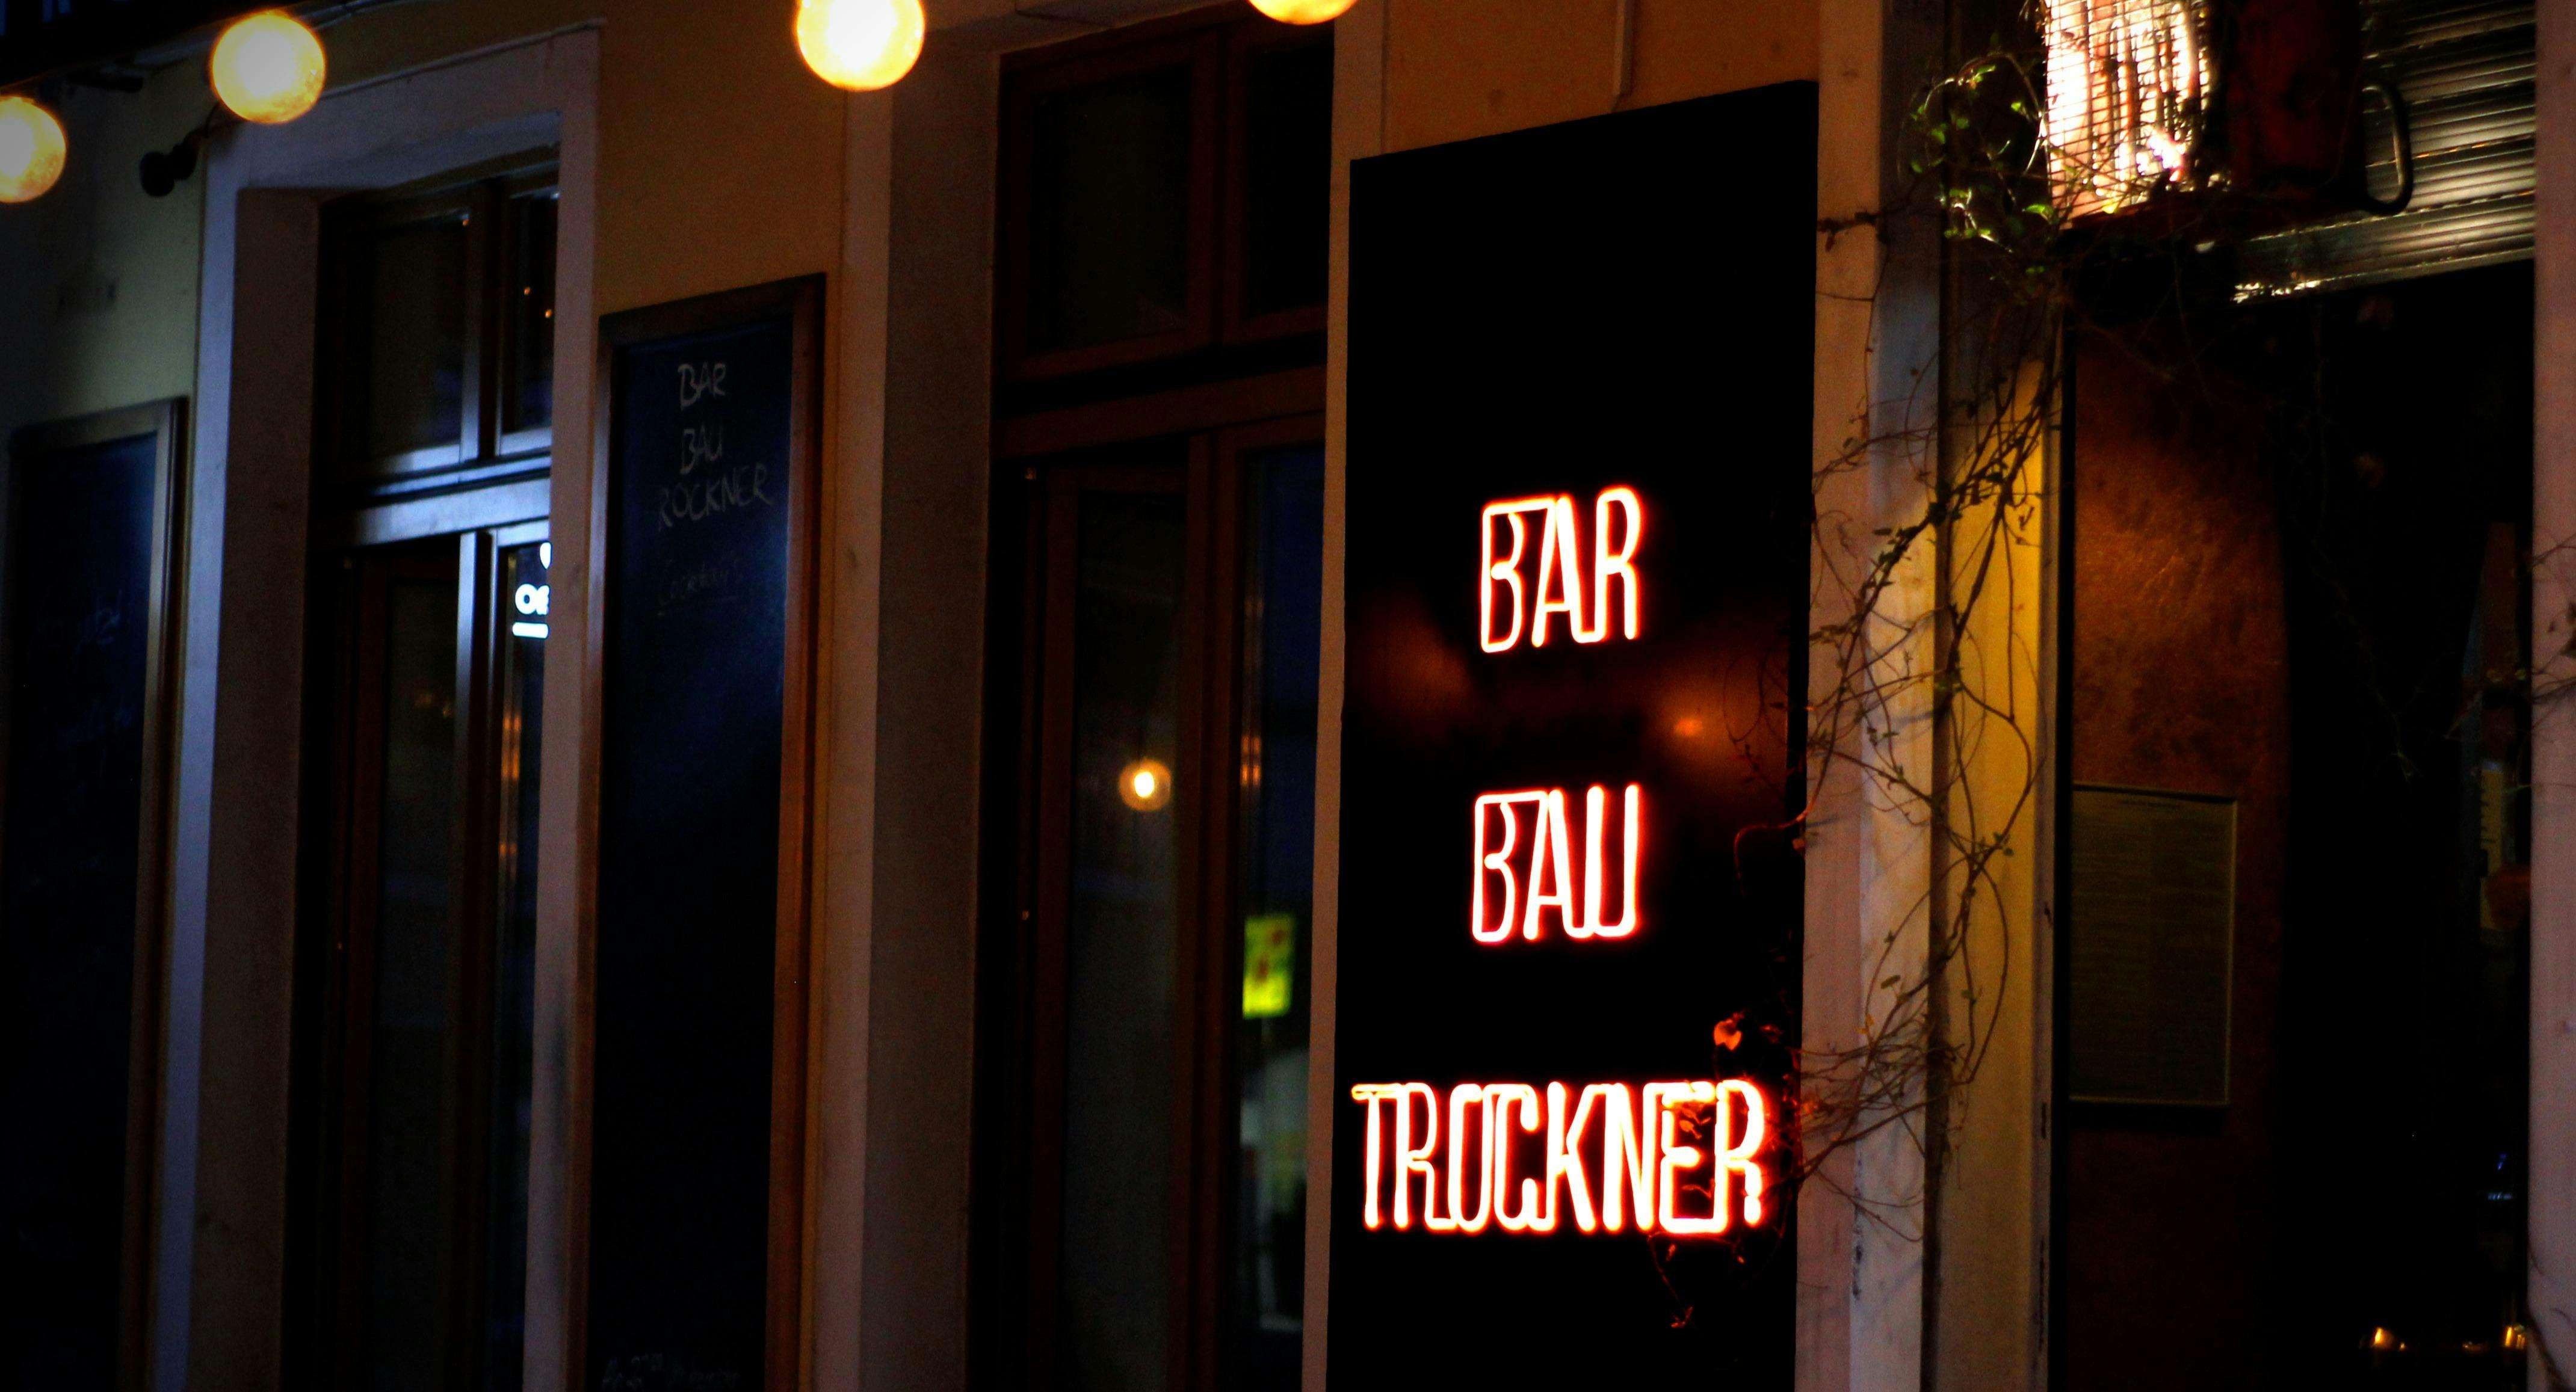 Photo of restaurant BAR BAUTROCKNER in Friedrichshain, Berlin